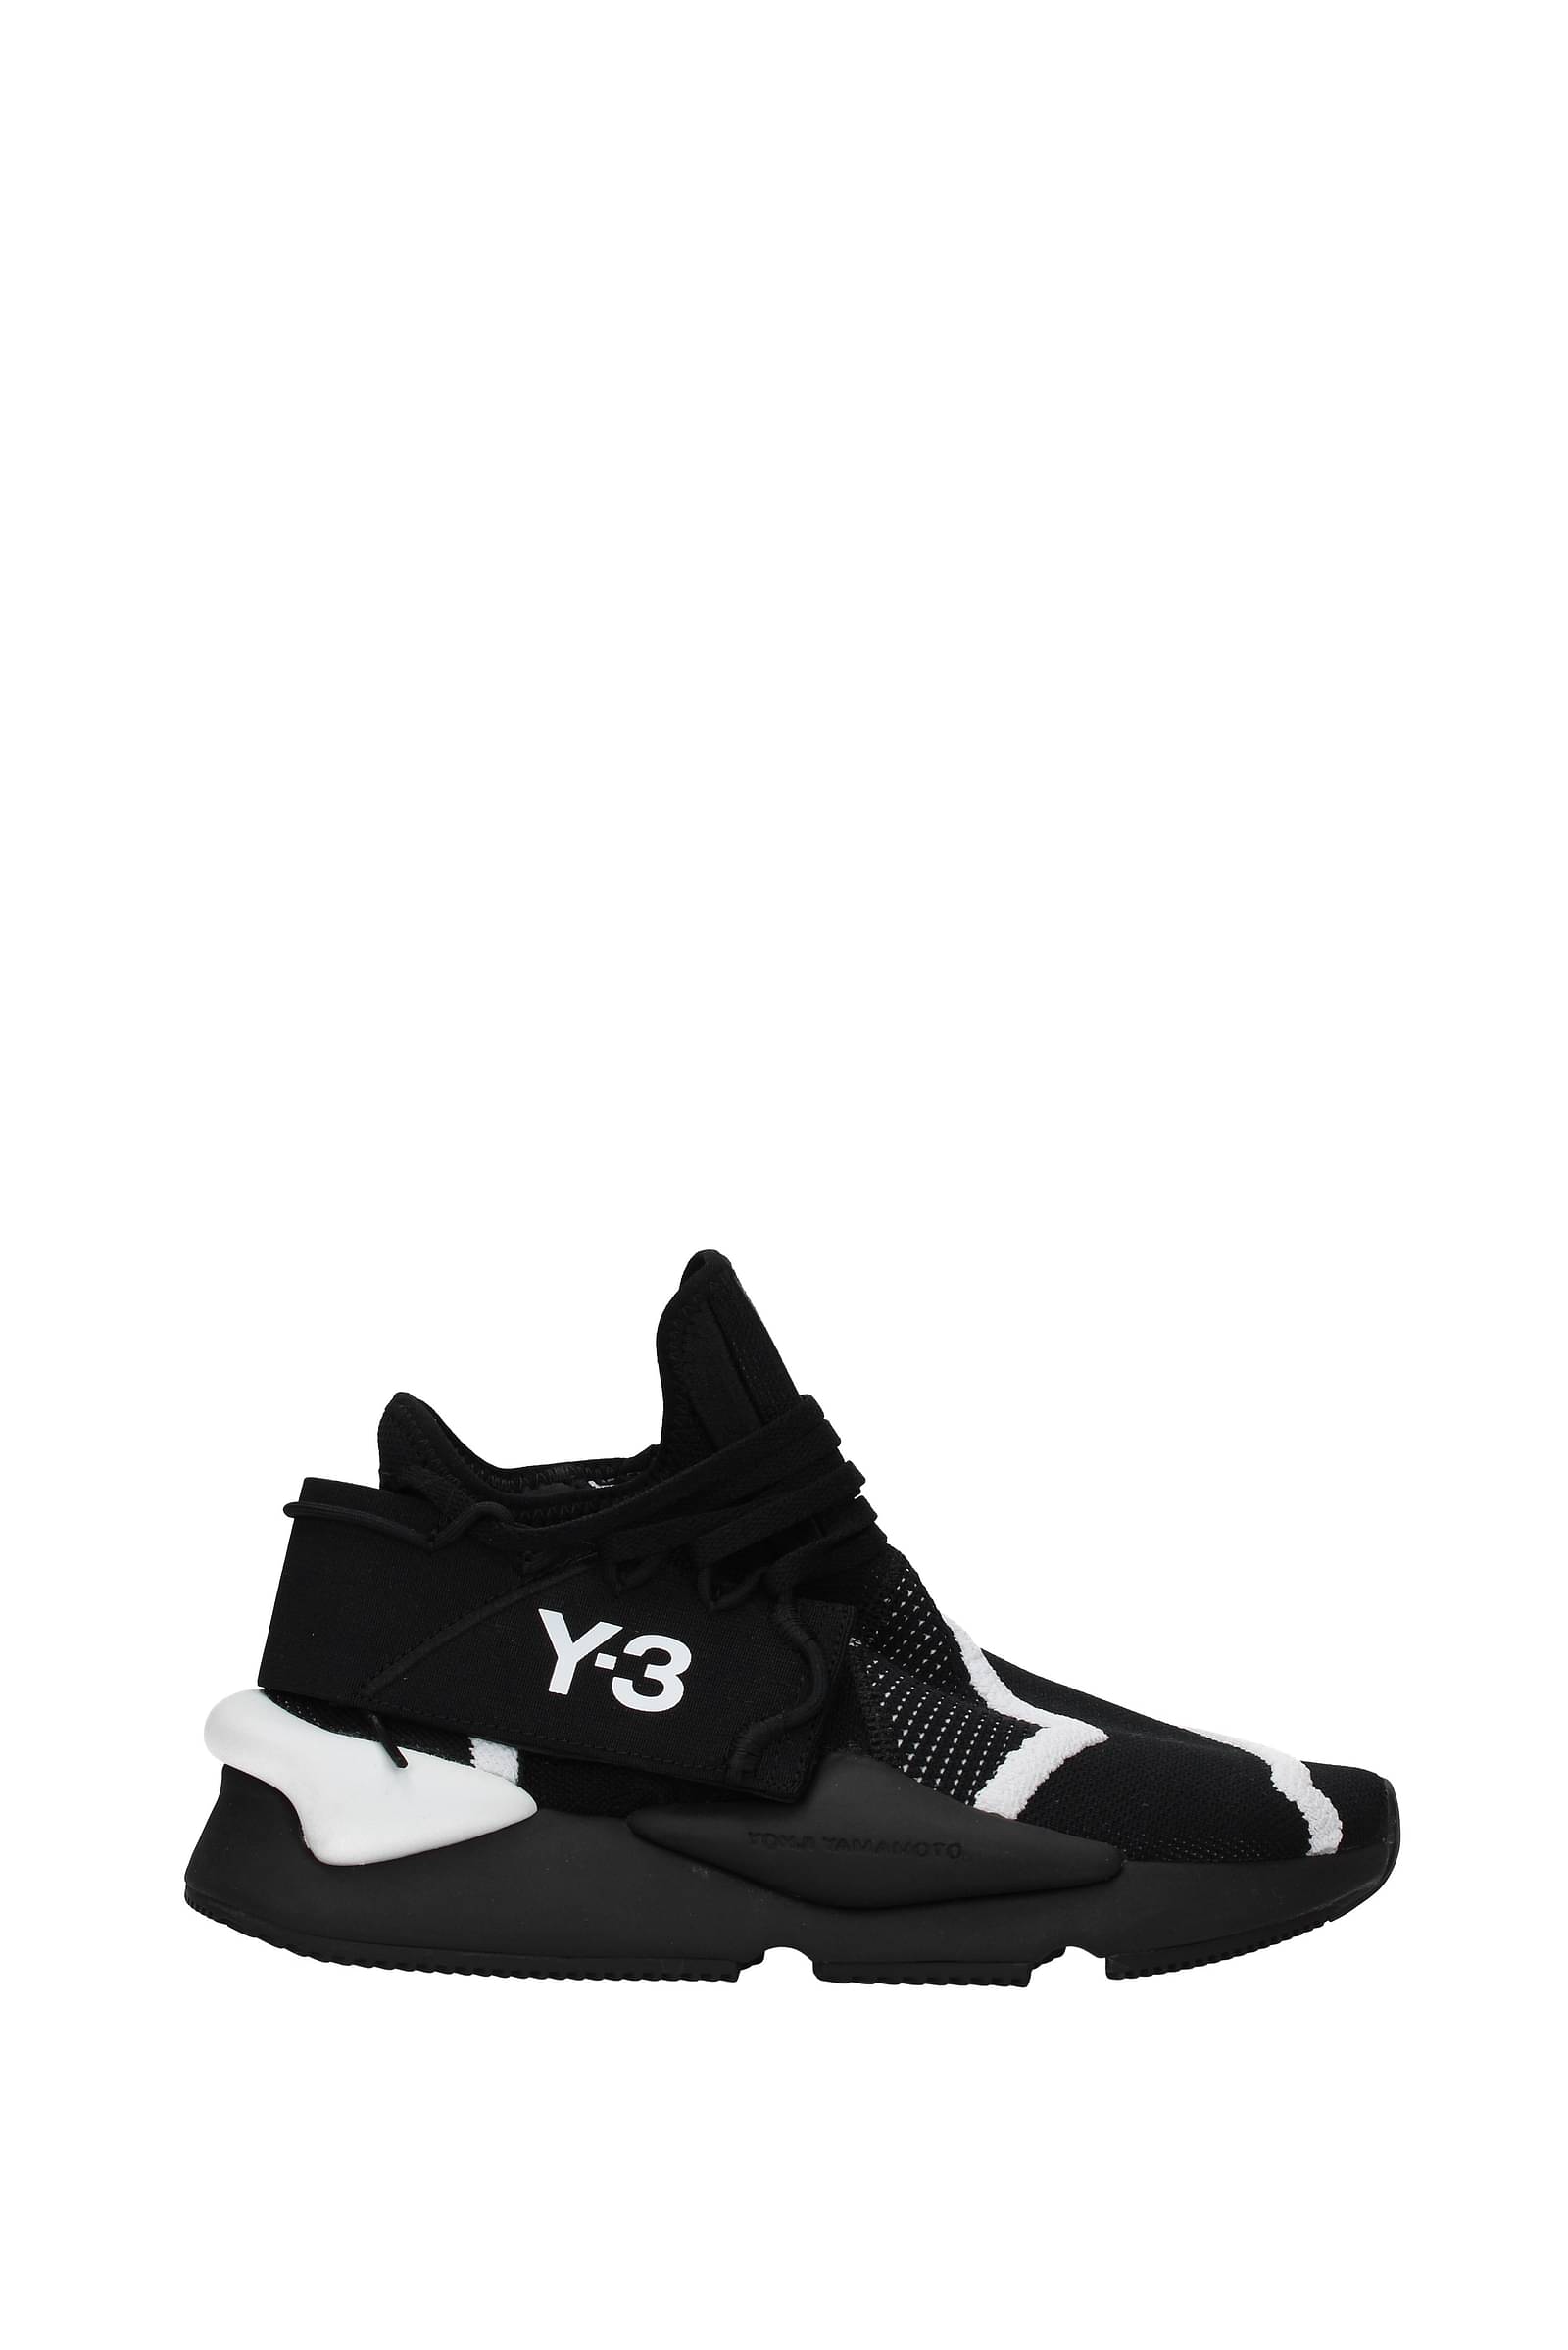 y3s shoes